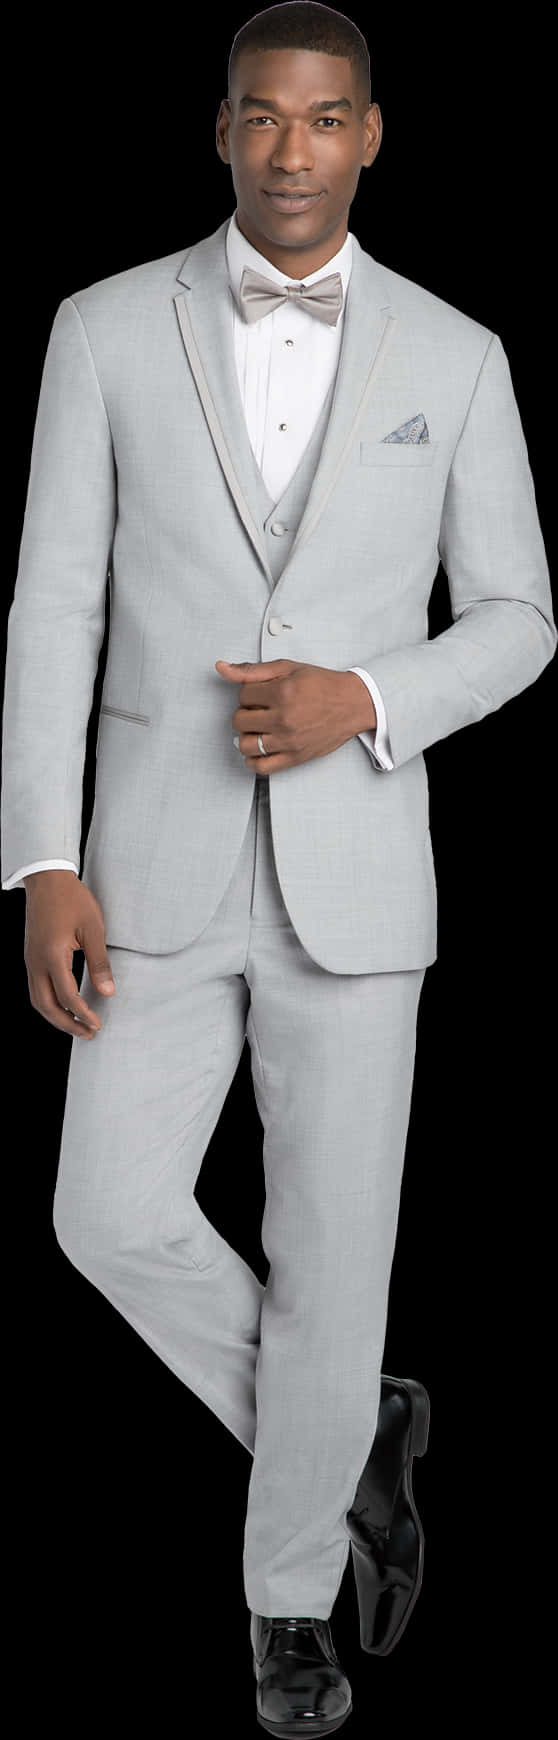 Elegant Manin Light Gray Suit PNG image